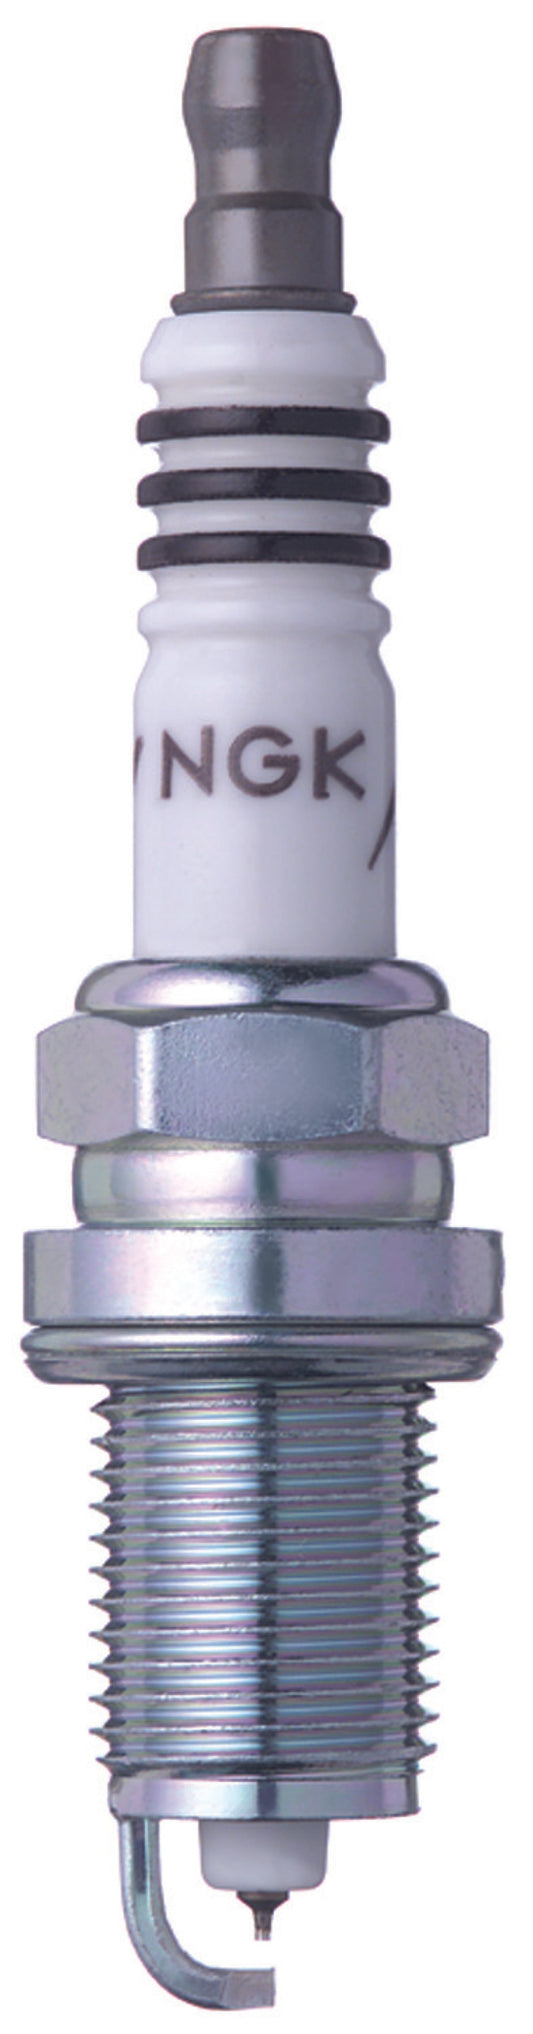 NGK Laser Iridium Spark Plug Box of 4 (IZFR5G)